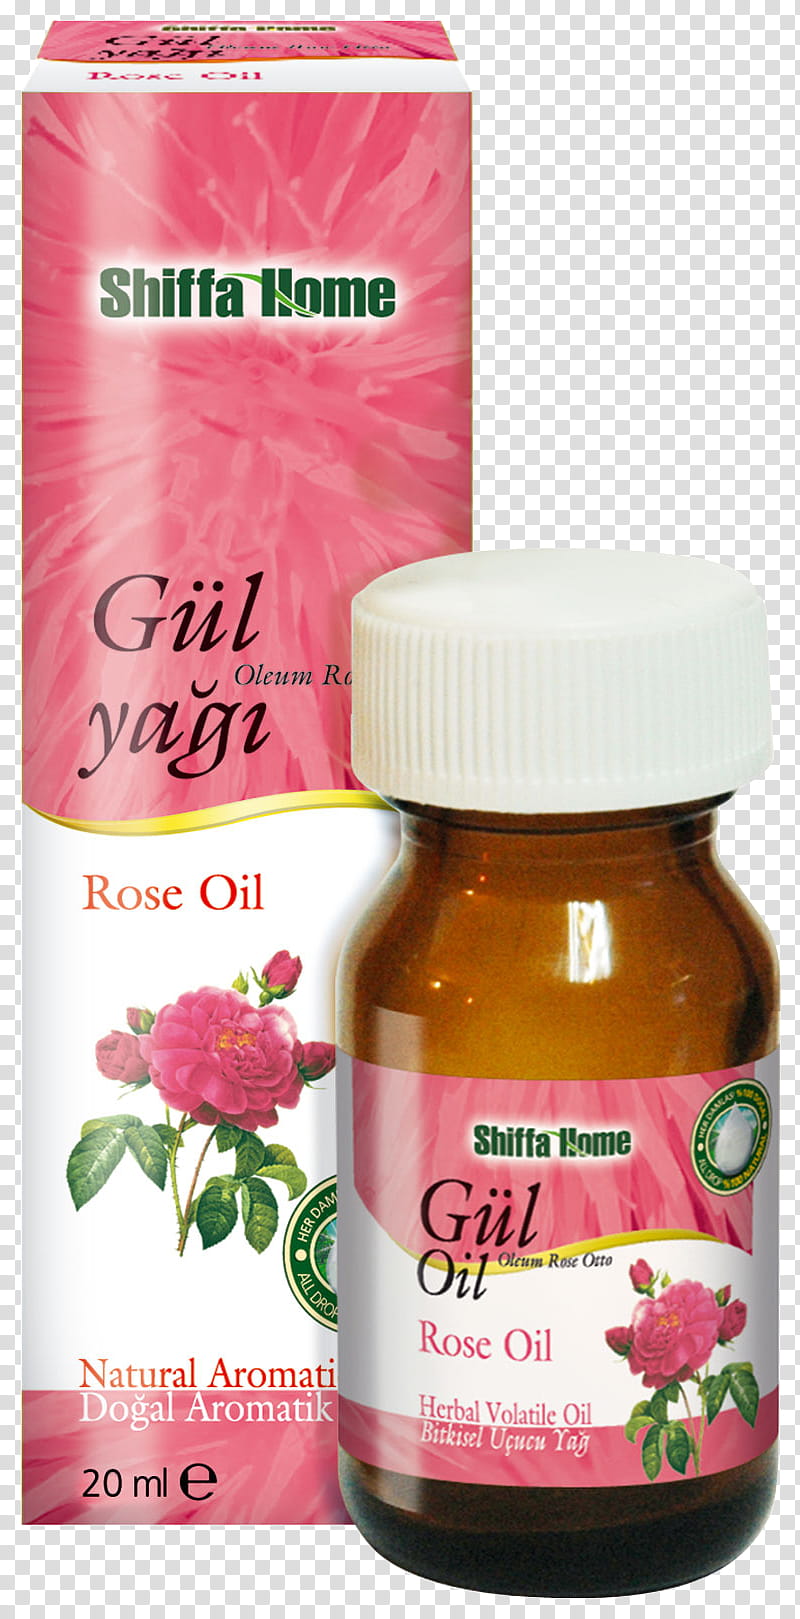 Flower Rose, Rose Oil, Sesame Oil, Perfume, Apricot Oil, Almond Oil, Essential Oil, Argan Oil transparent background PNG clipart